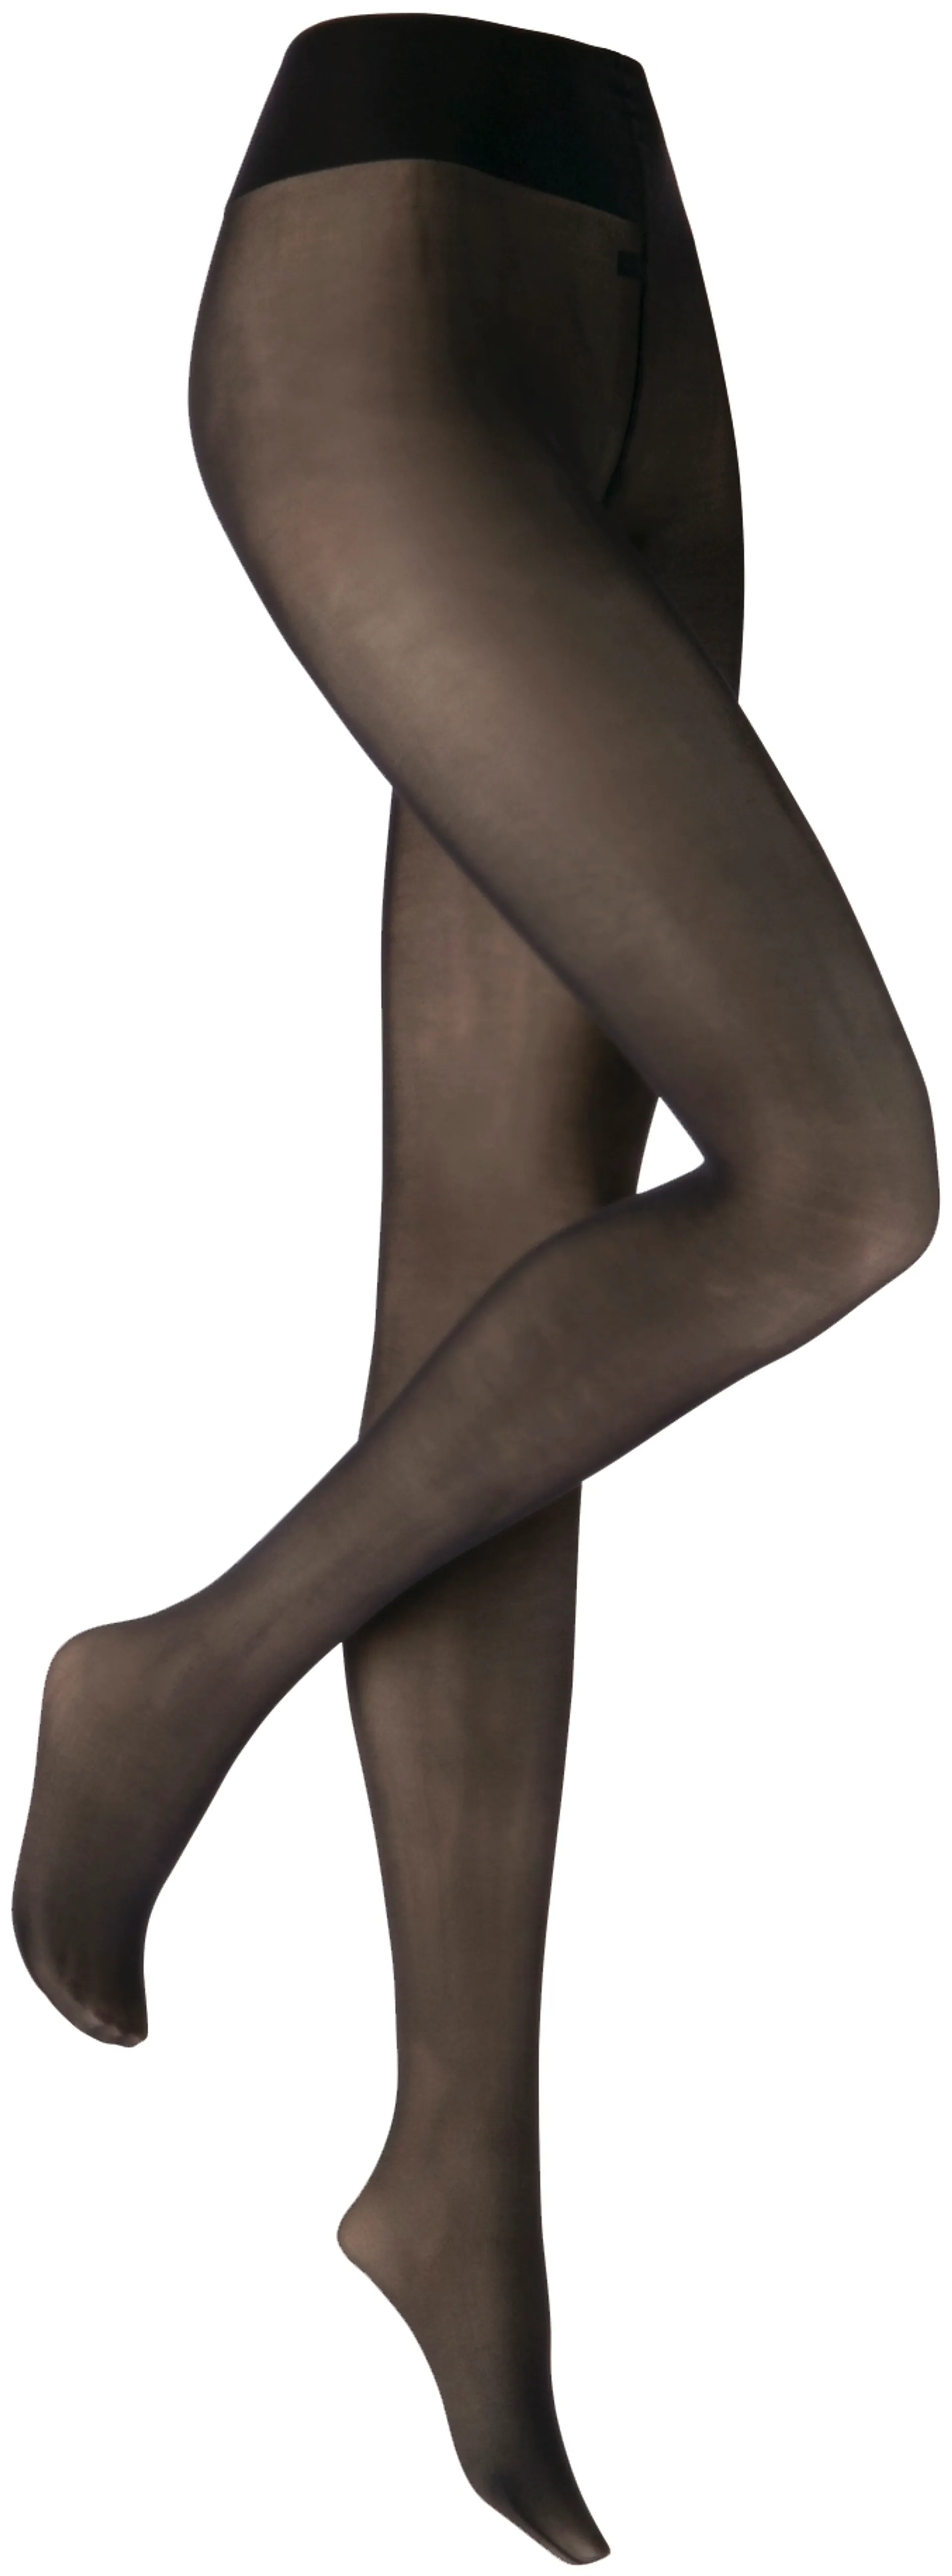 Vogue sukkahousut Conscious Opaque 40den musta - BLACK - 2